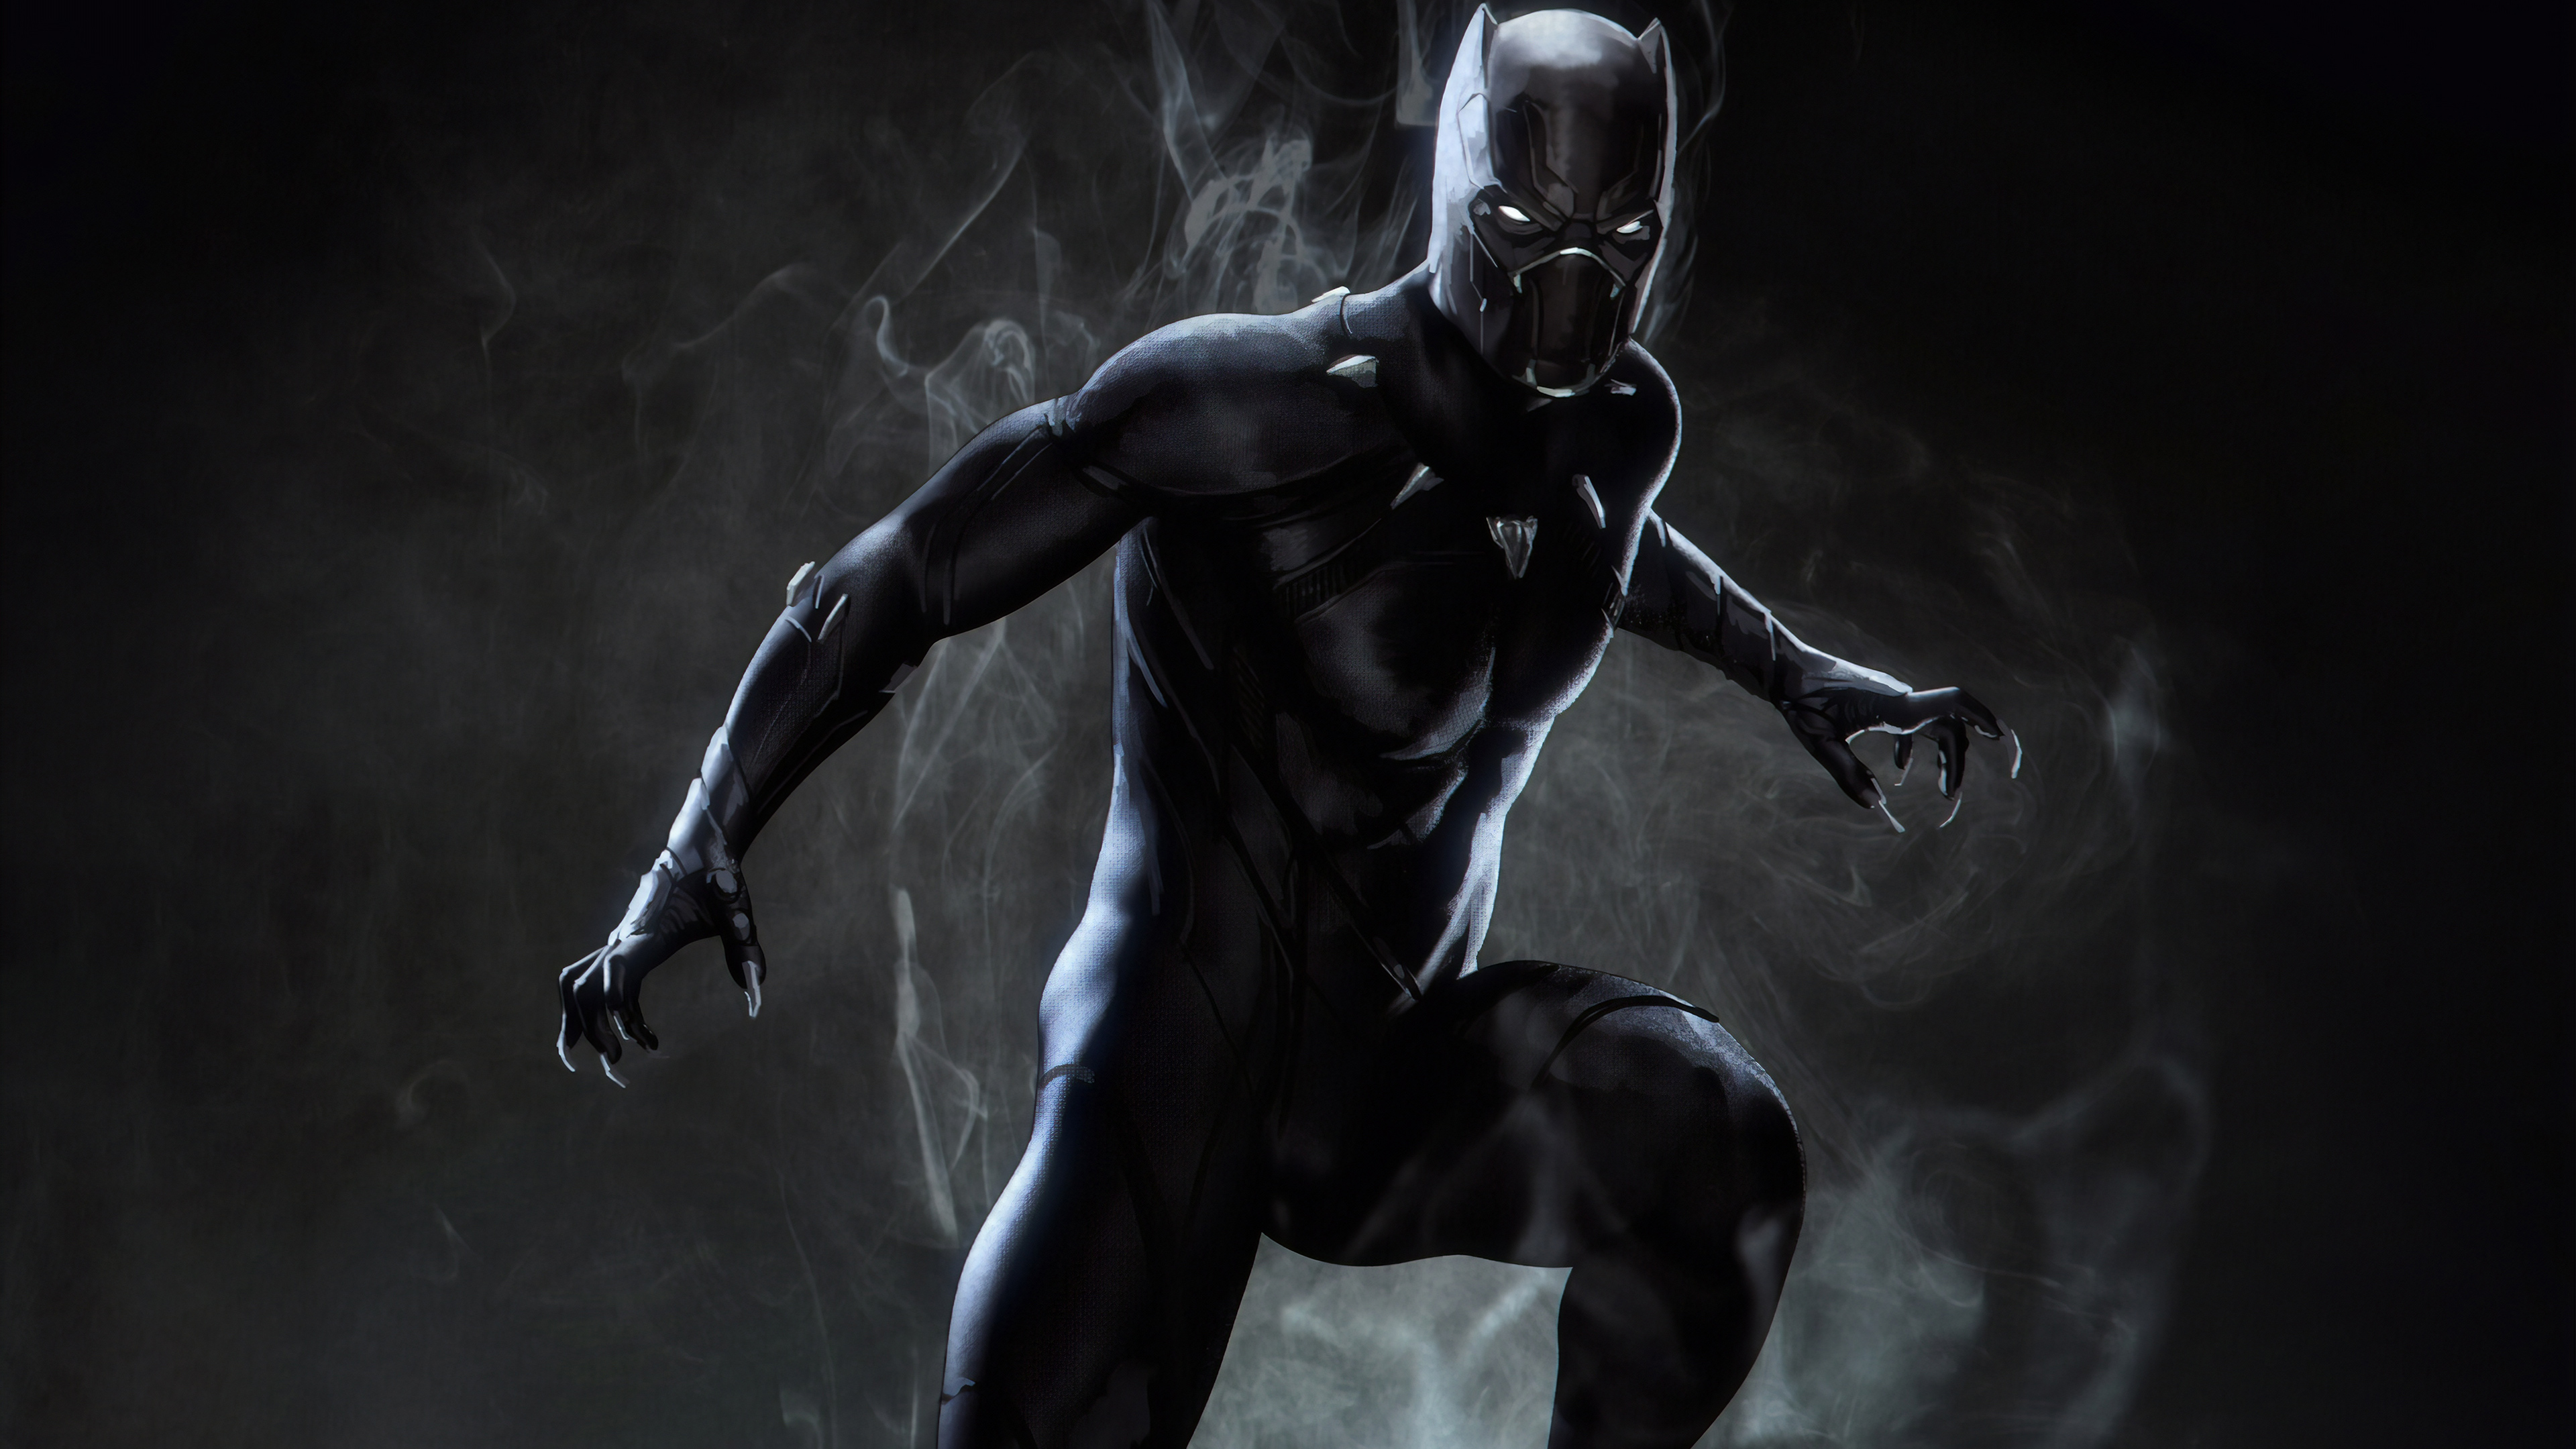 black panther marvel superhero 1565053076 - Black Panther Marvel Superhero - superheroes wallpapers, marvel wallpapers, hd-wallpapers, black panther wallpapers, artstation wallpapers, 4k-wallpapers